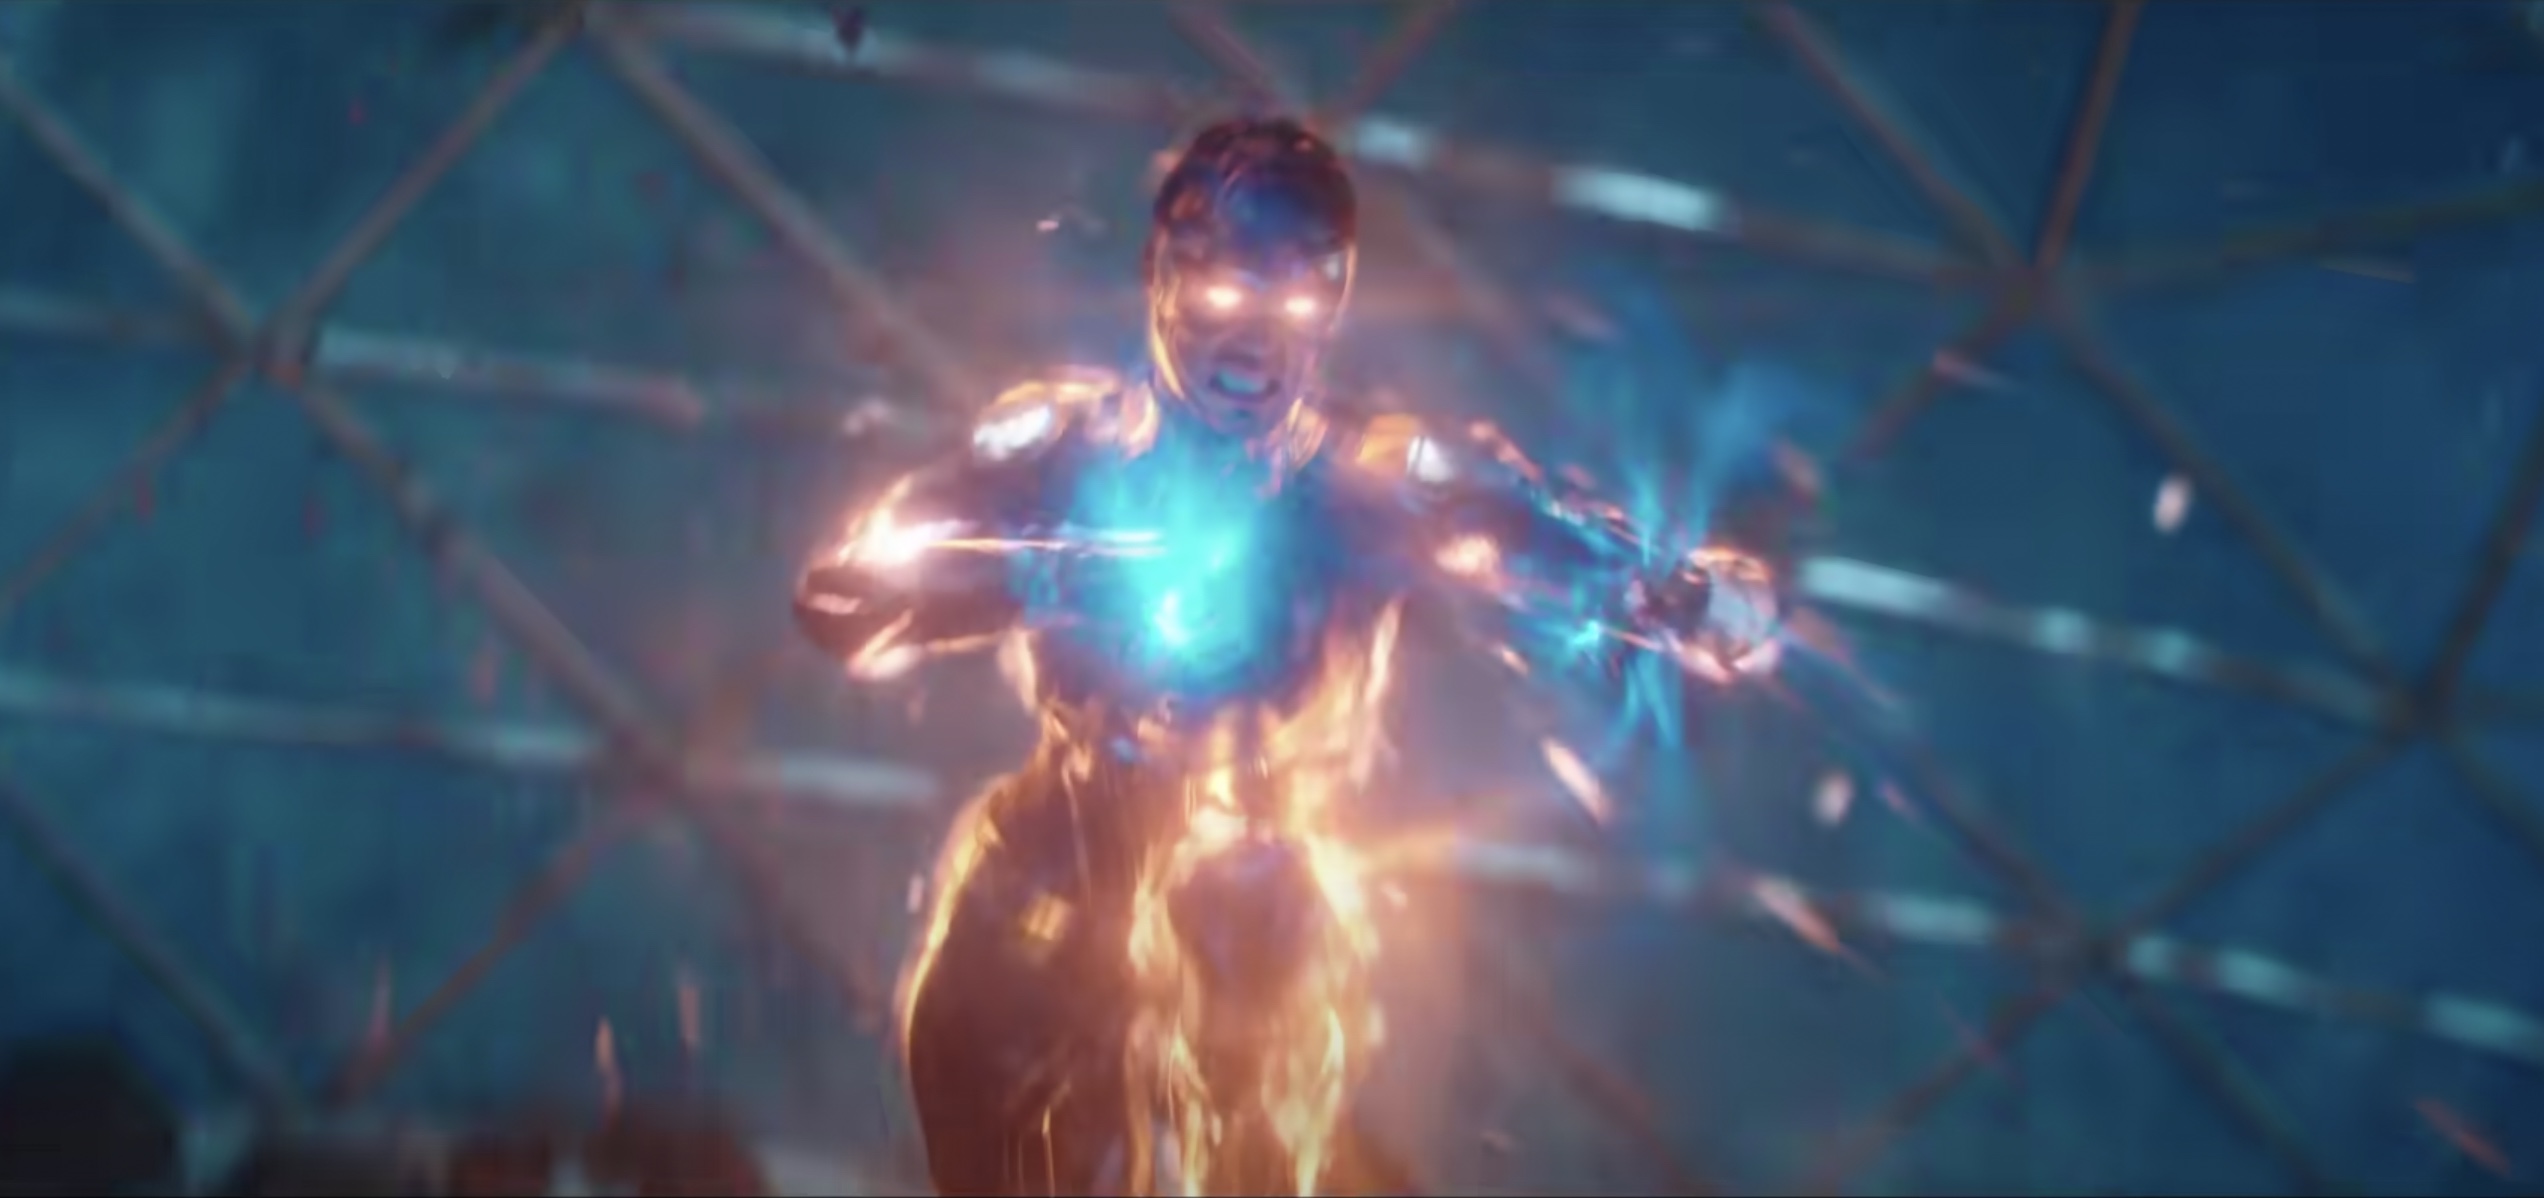 Superior Iron Man Doctor Strange 2 Promo